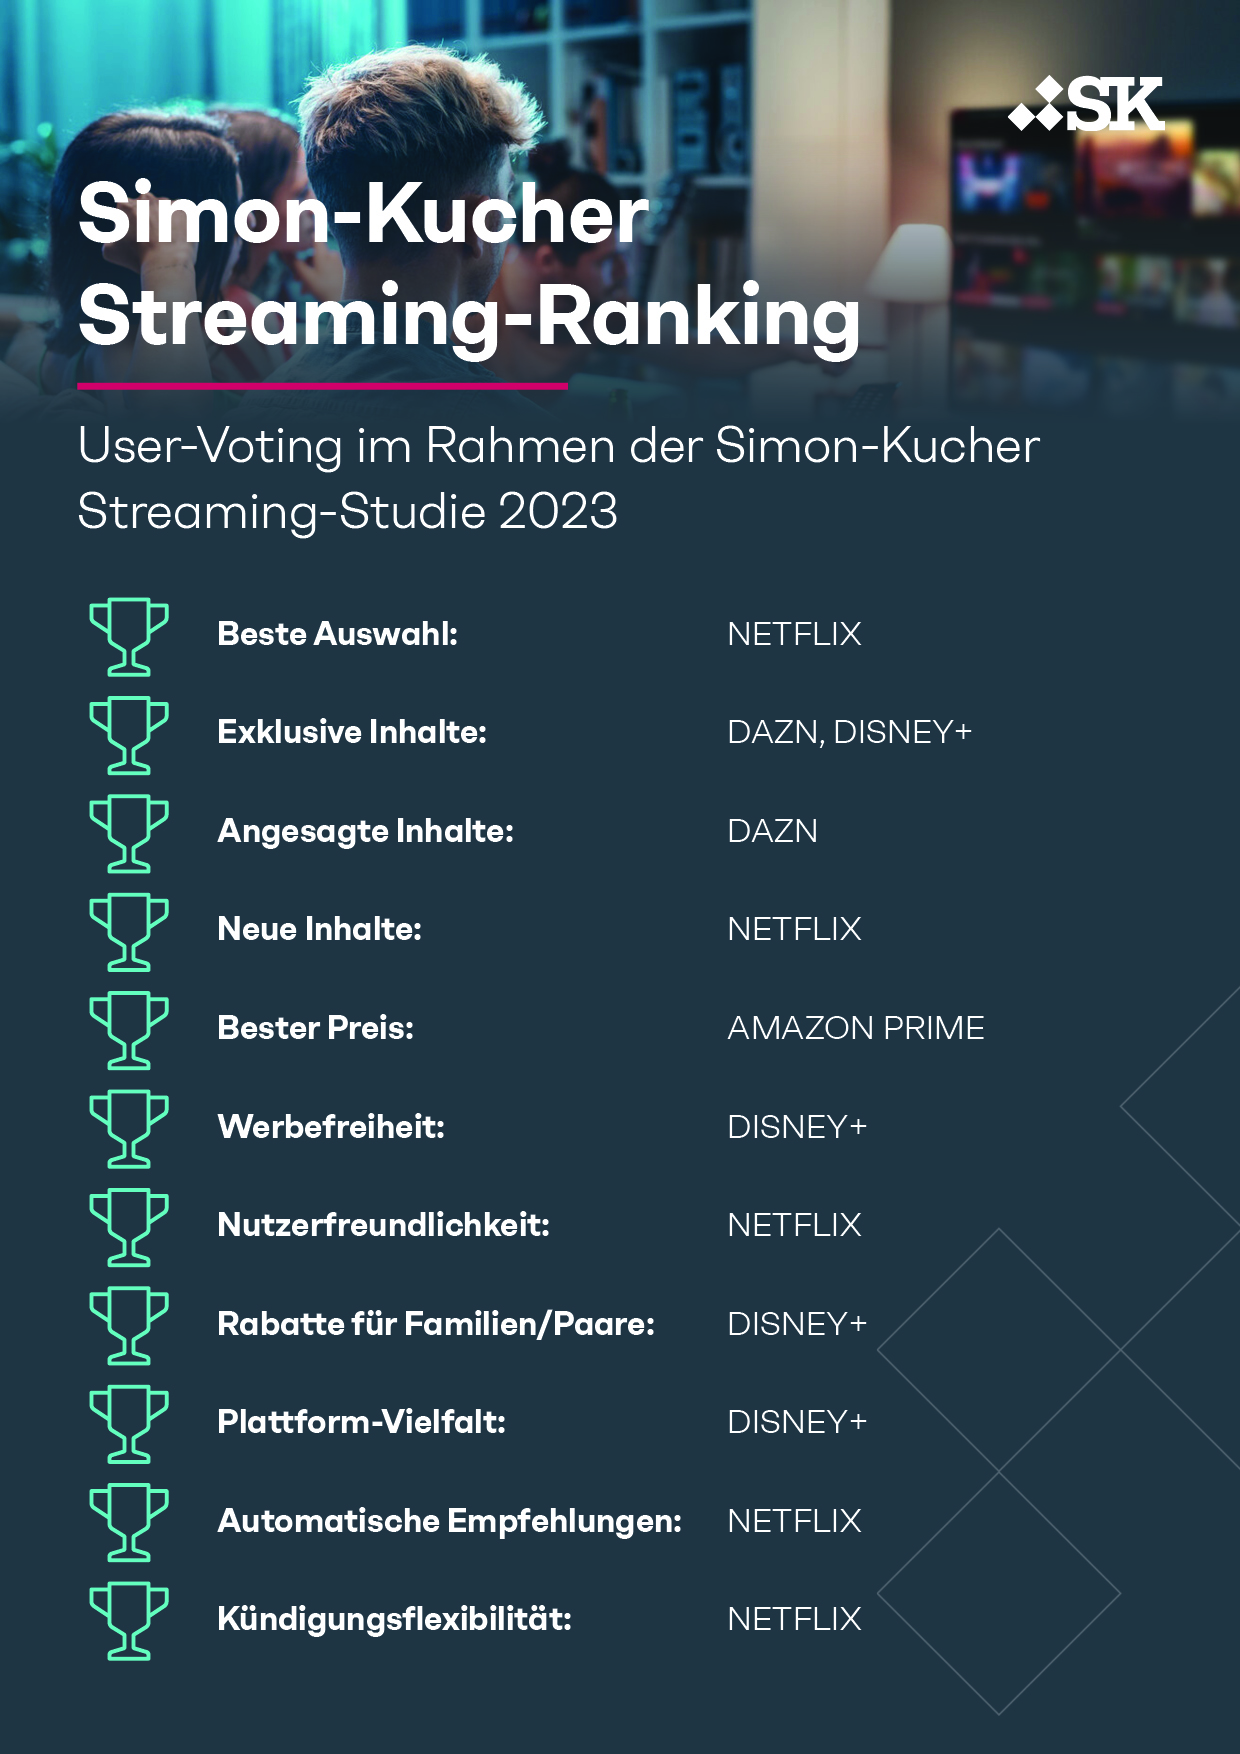 SImon-Kucher Streaming-Ranking